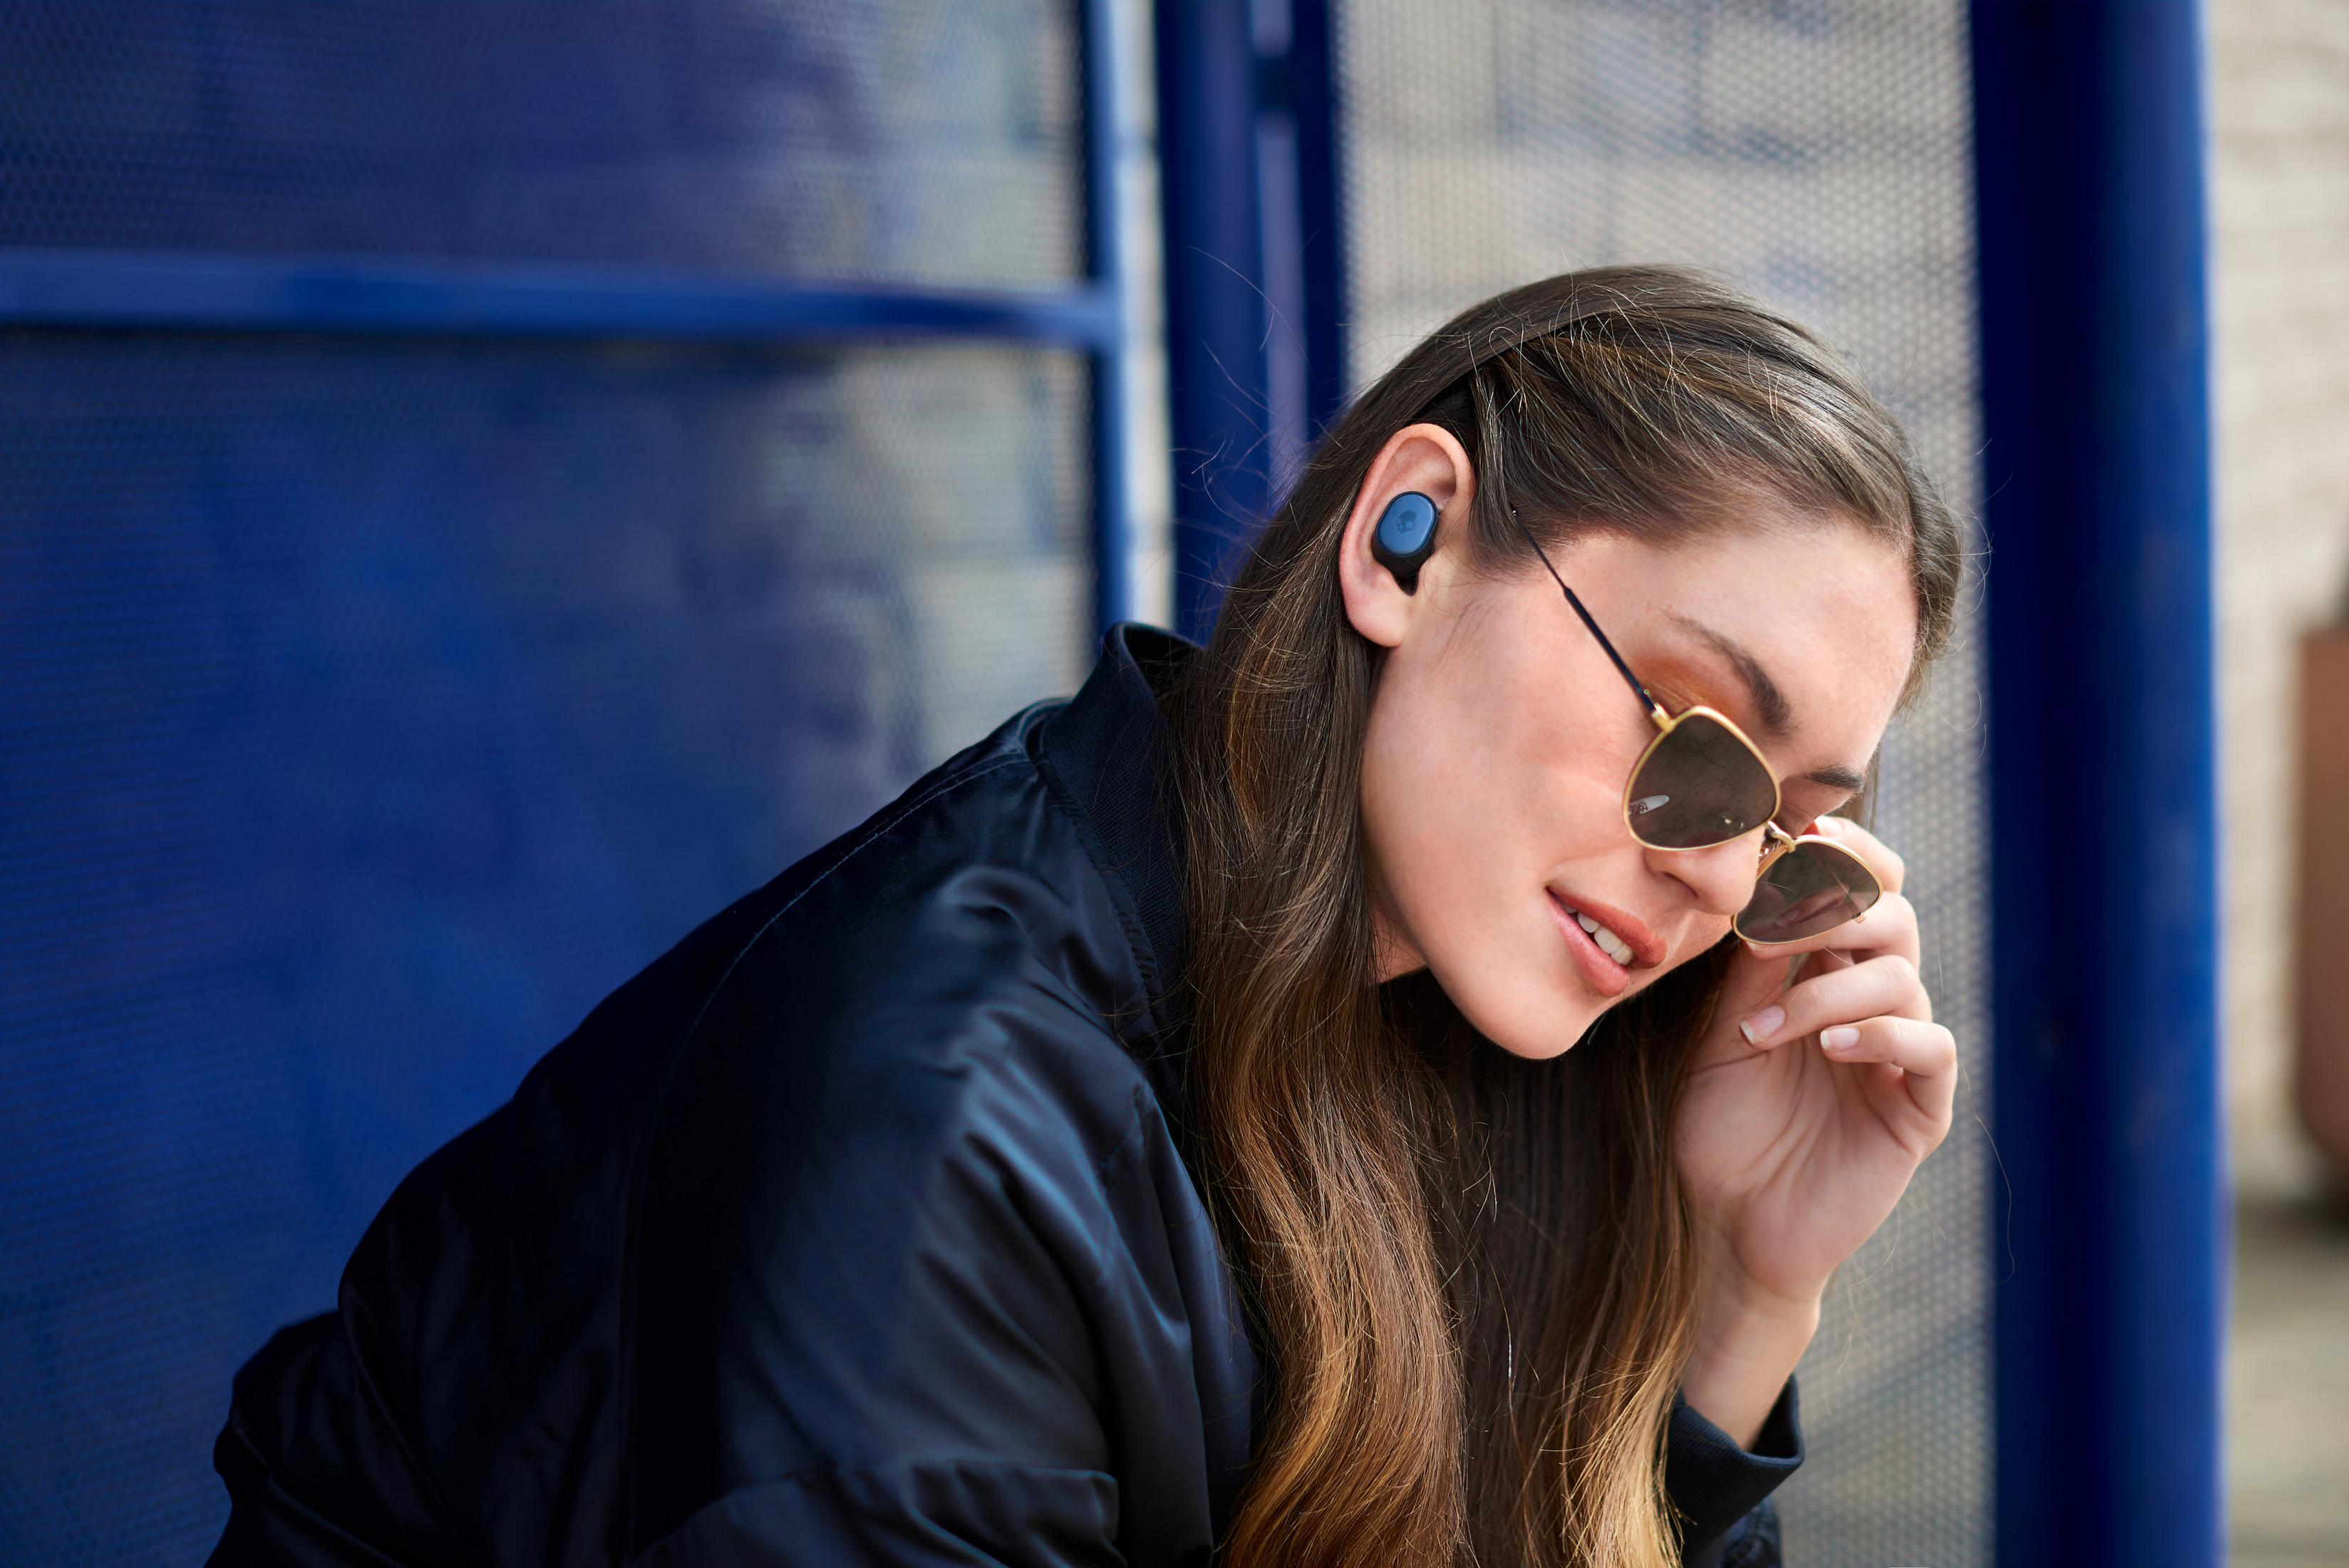 BLUE, INDIGO In-ear SESH SKULLCANDY TRUE Bluetooth Kopfhörer WL S2TDW-M704 Blau